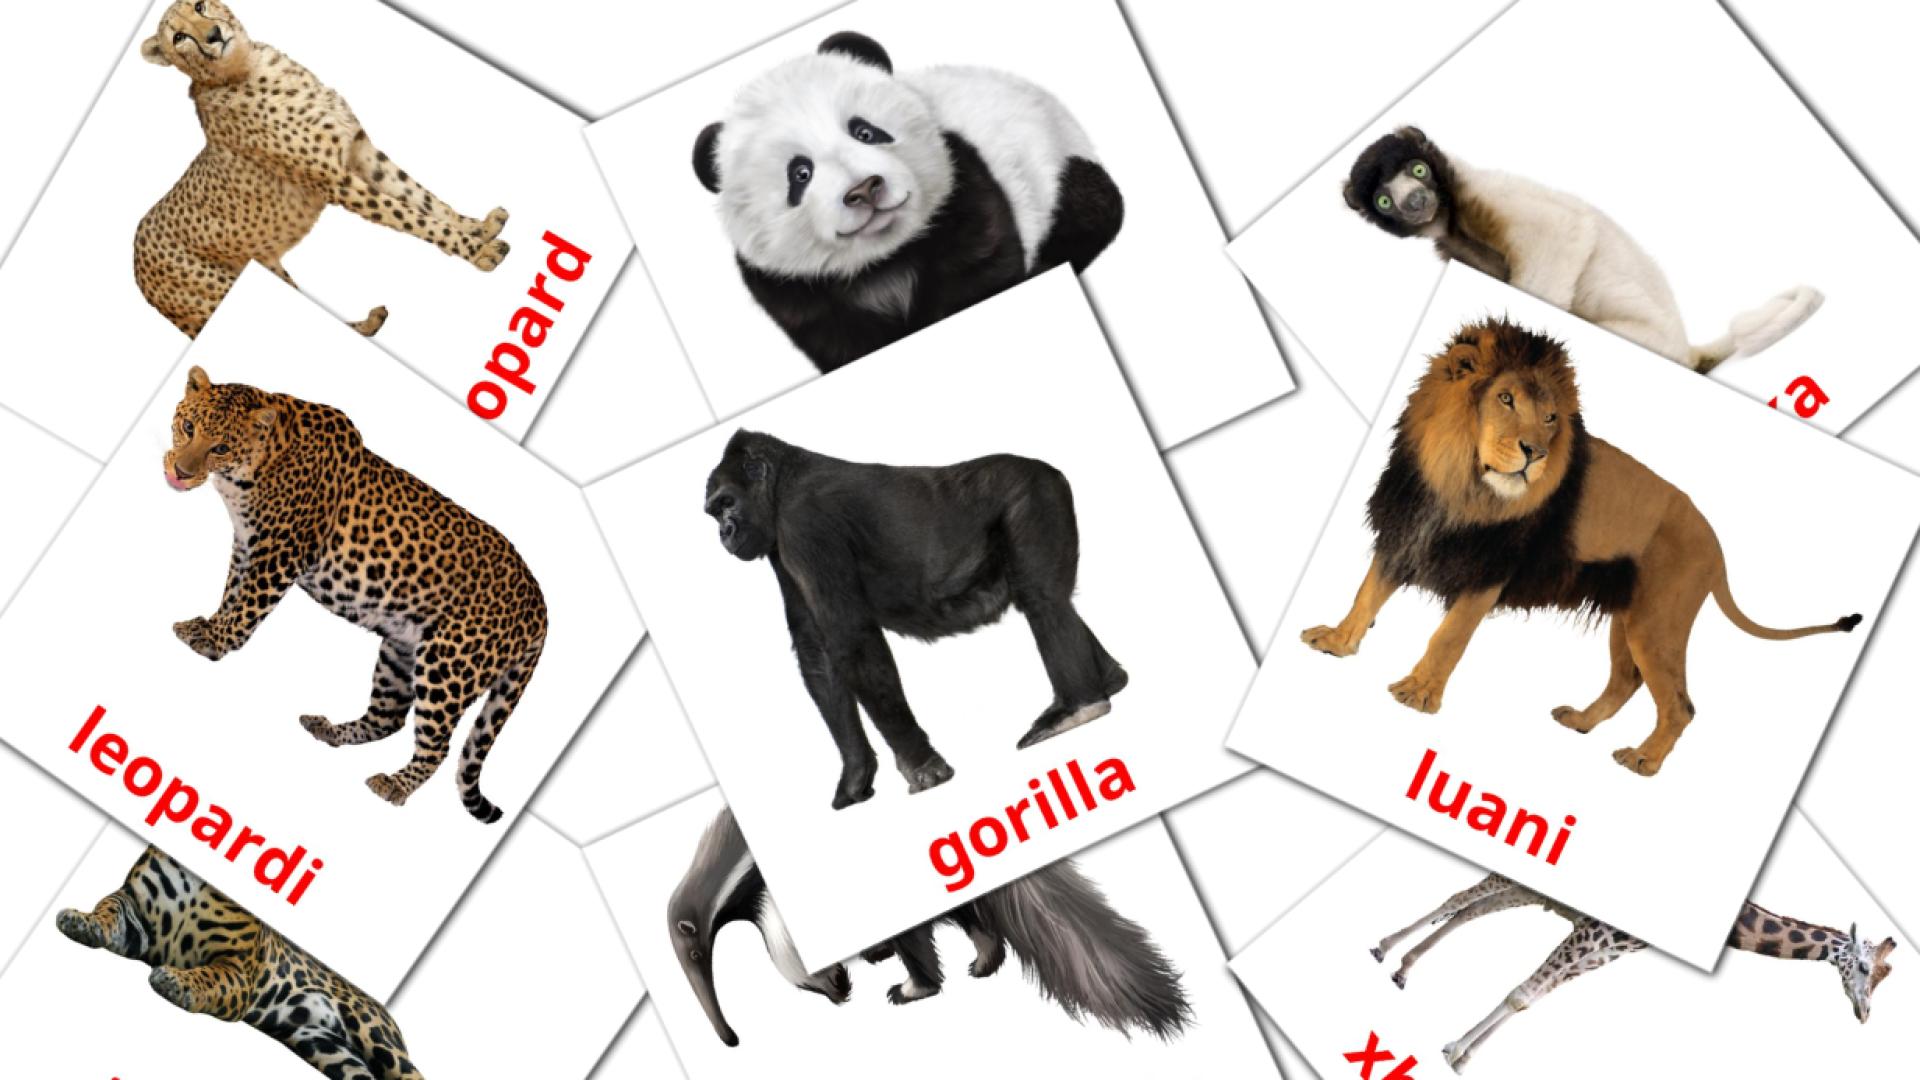 Jungle animals - albanian vocabulary cards